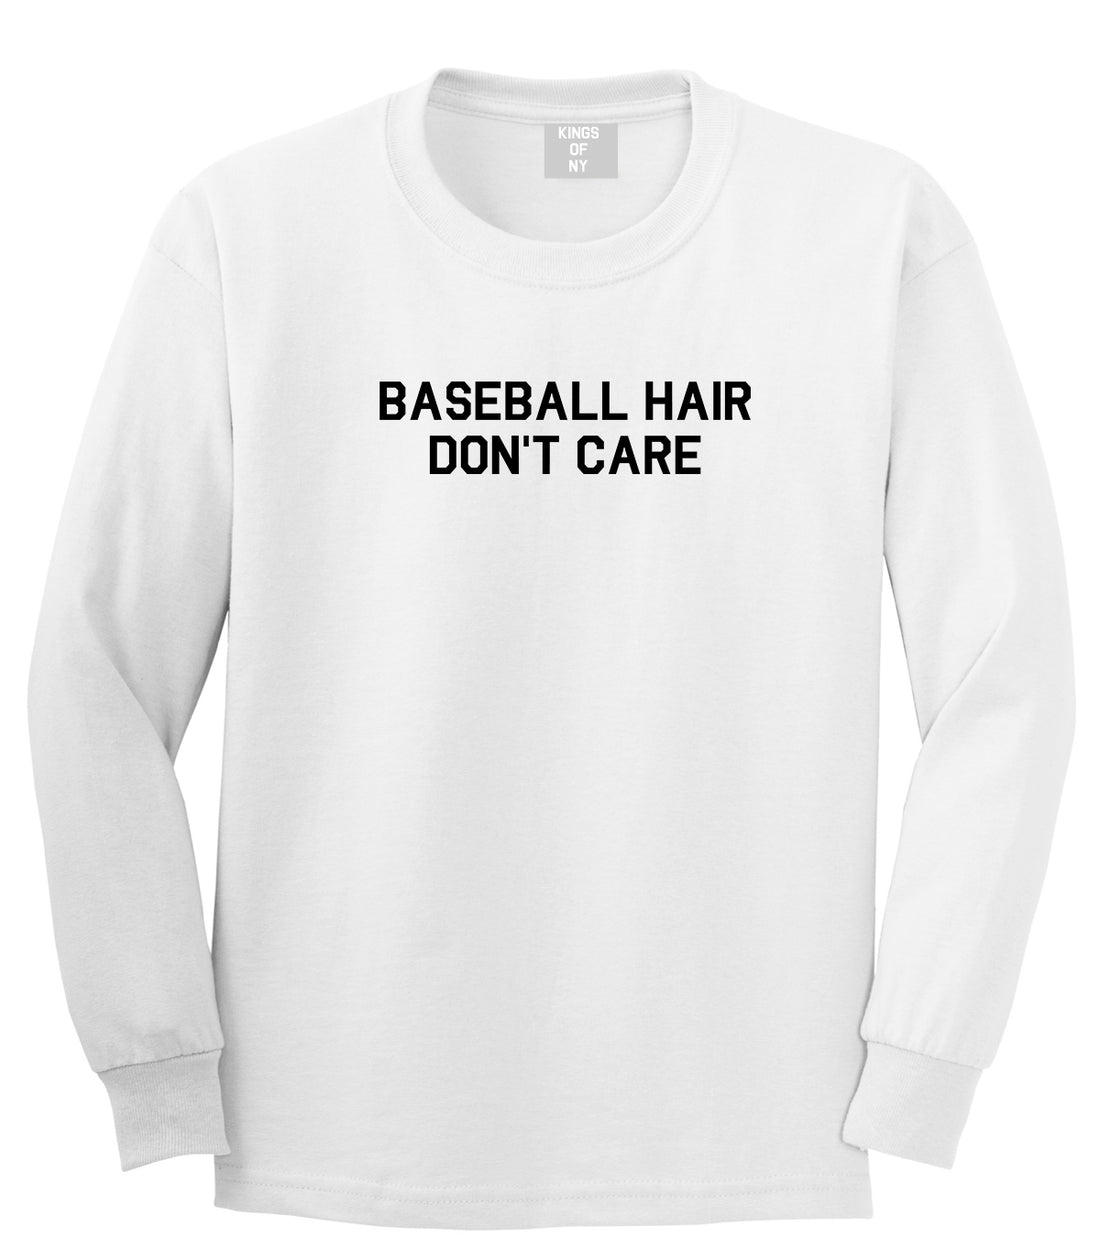 Baseball Hair Dont Care White Long Sleeve T-Shirt by Kings Of NY